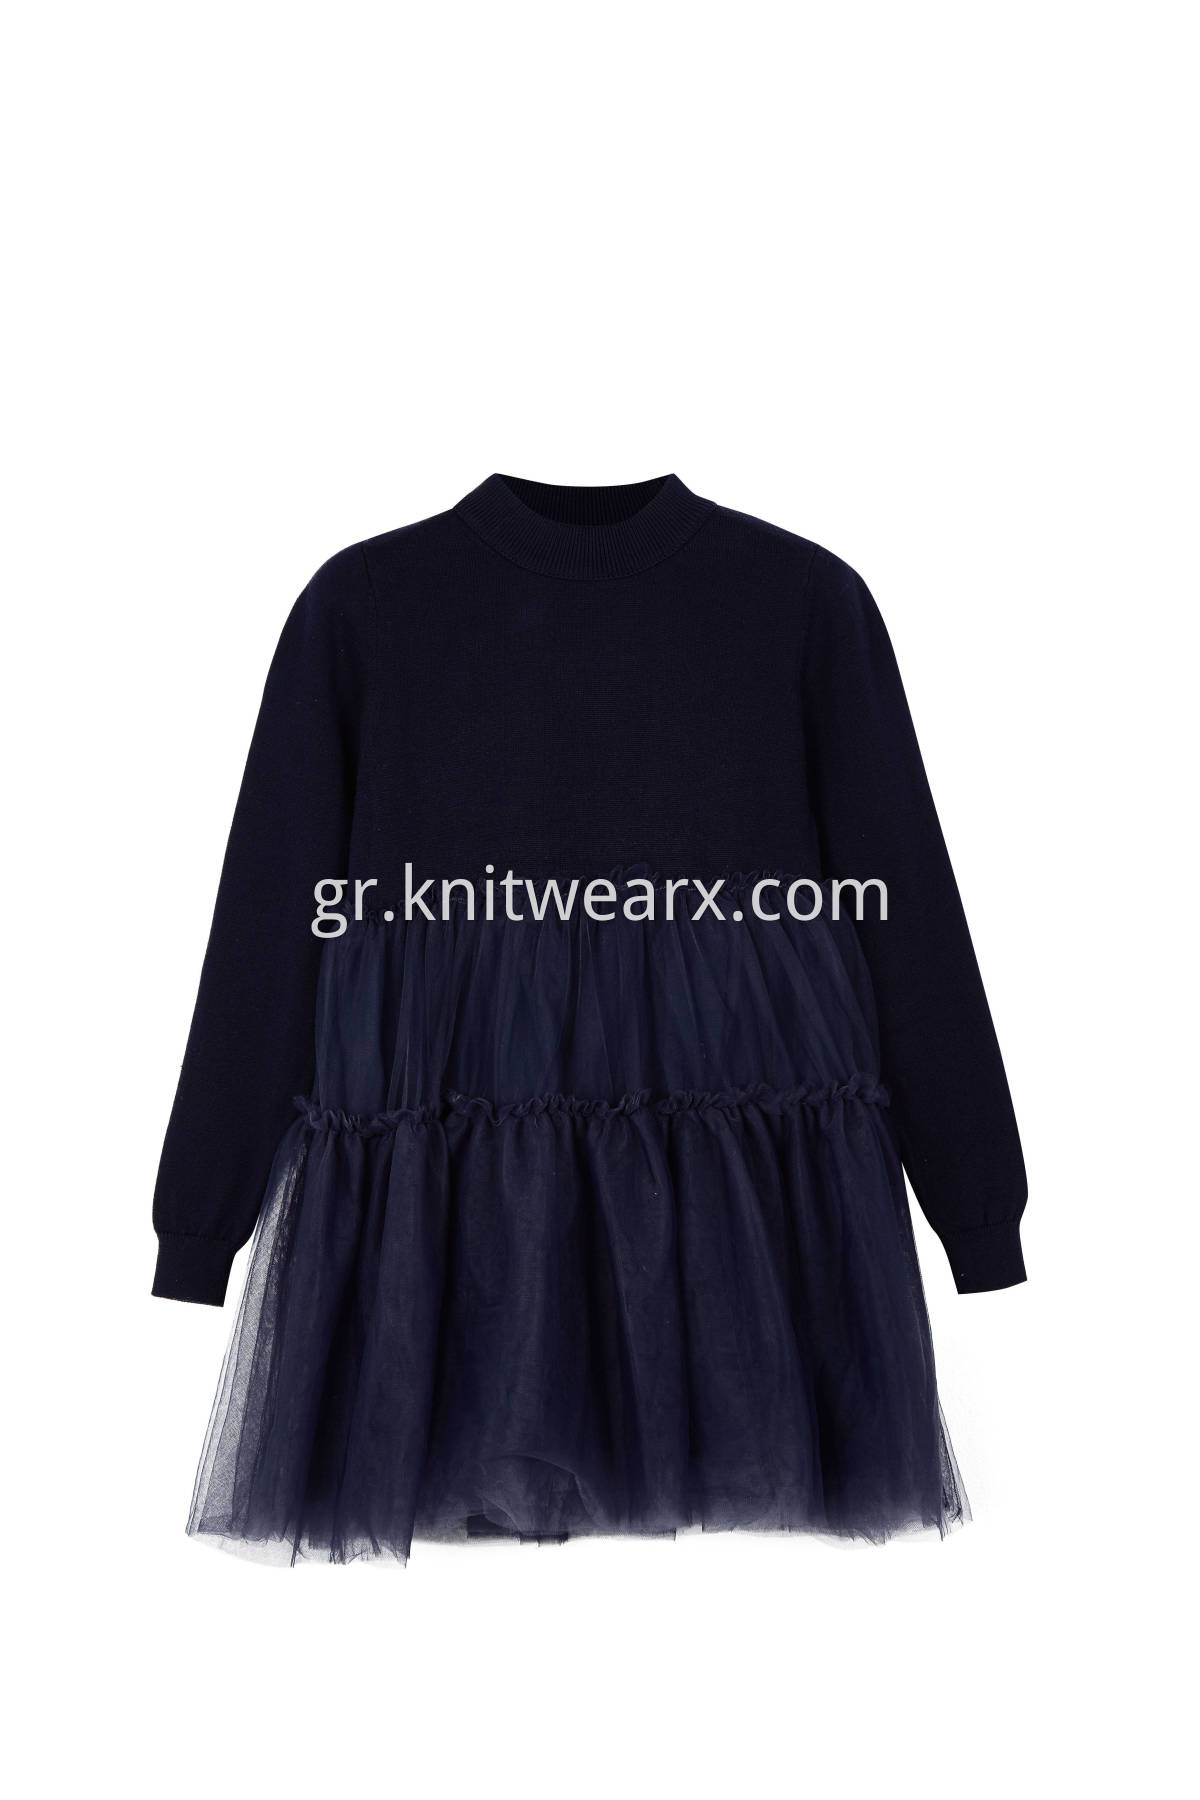 Girl's Spring Elegant Knitted Dress Warm Outfit Skirt